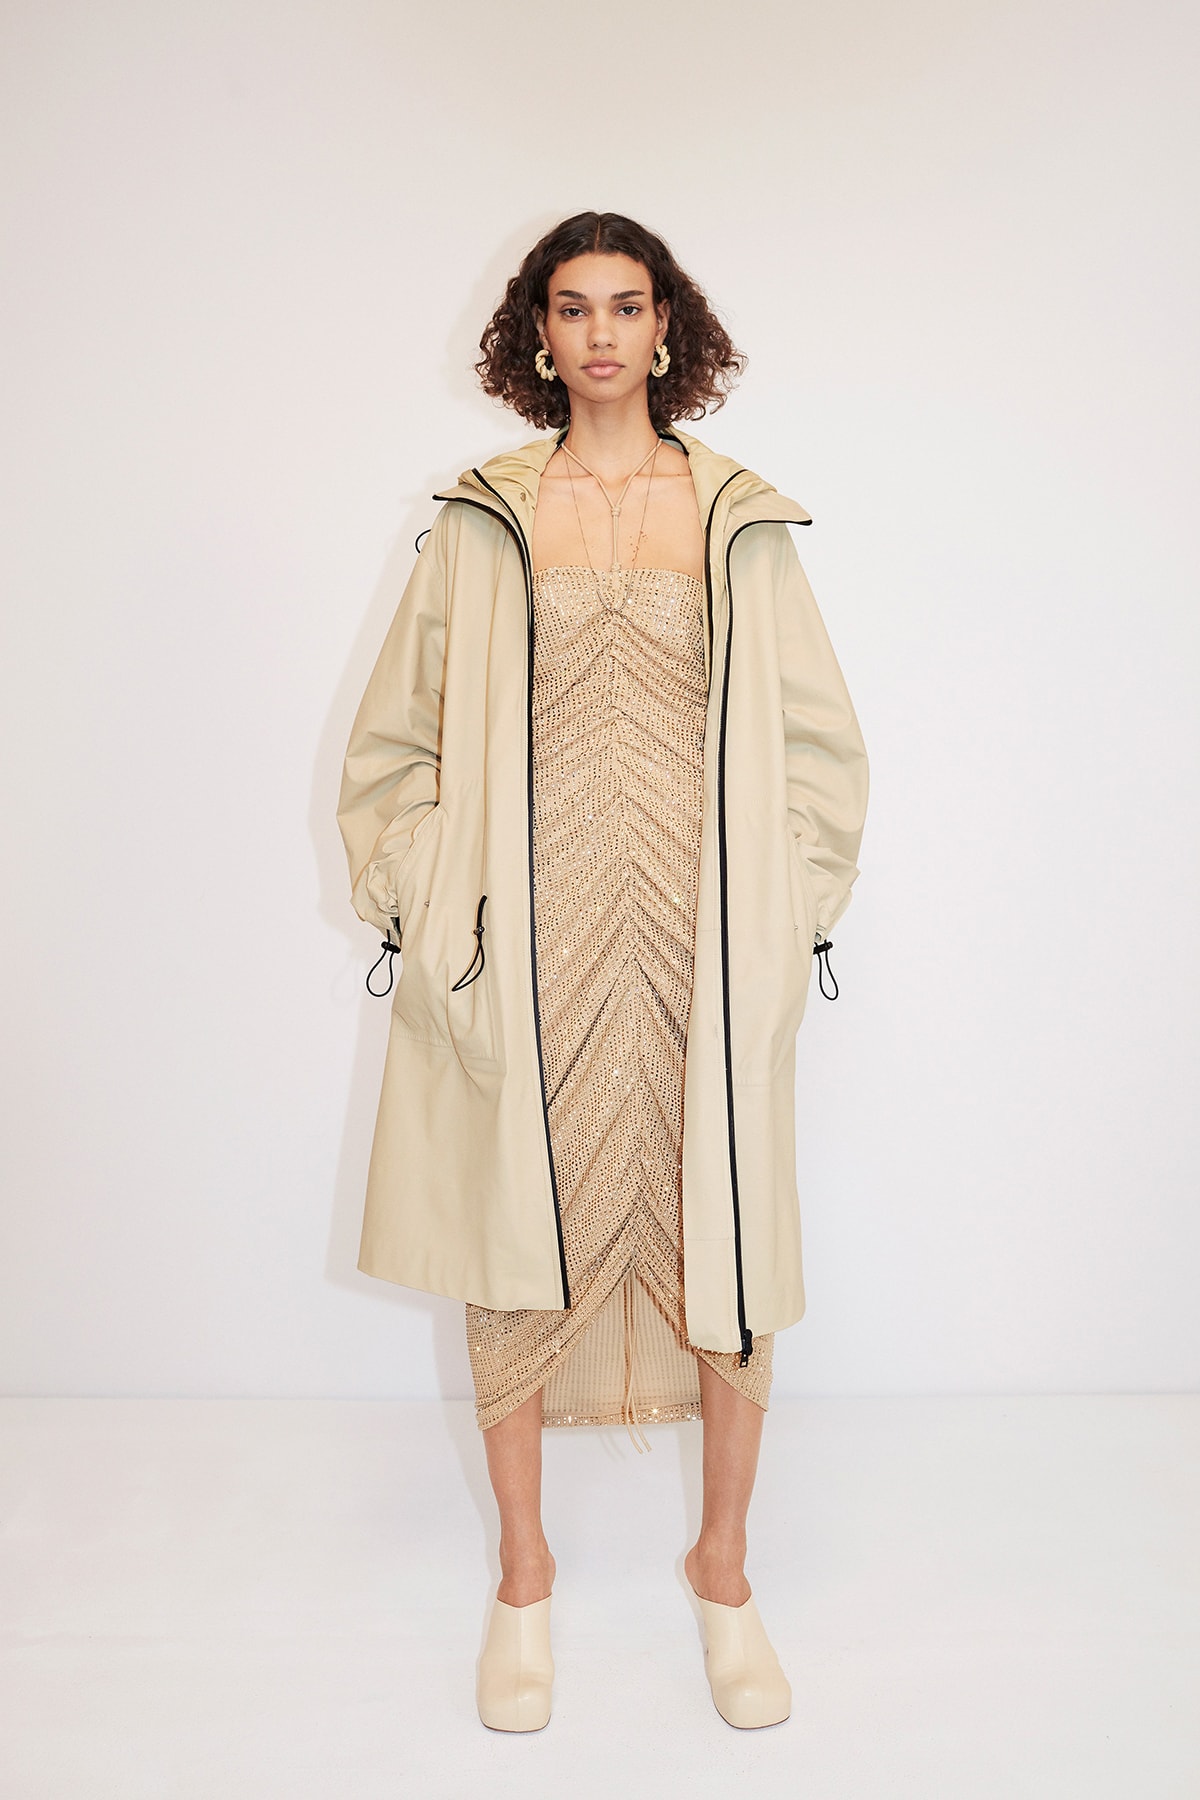 Bottega Veneta Pre-Fall 2020 Collection Lookbook Ruched Dress Beige